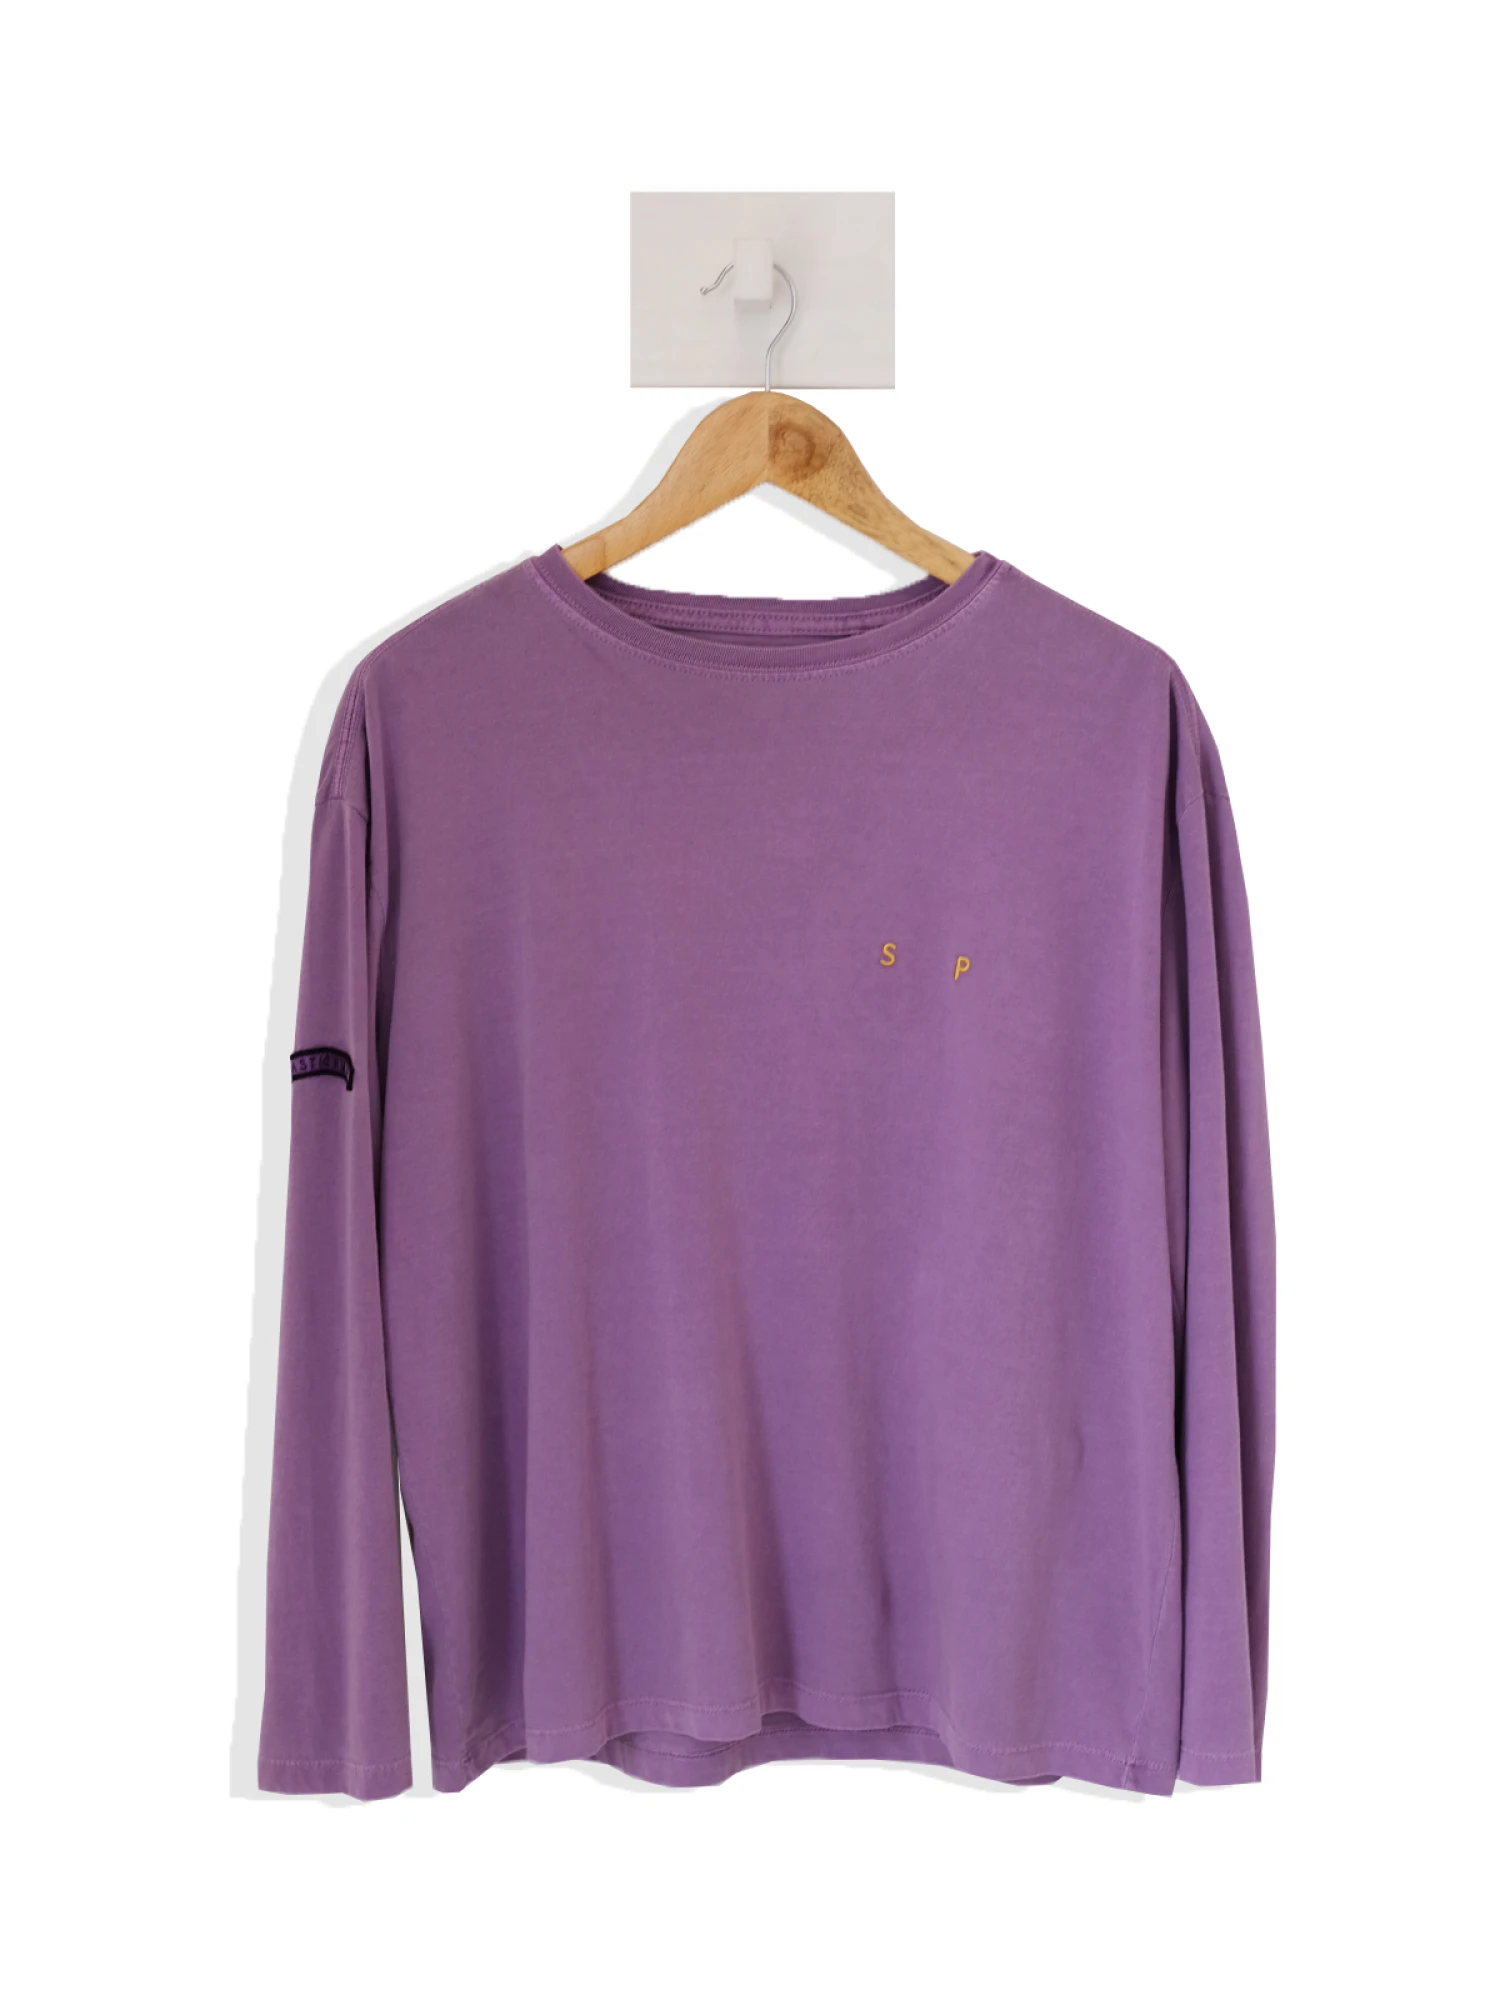 T-shirt Prince violeta l